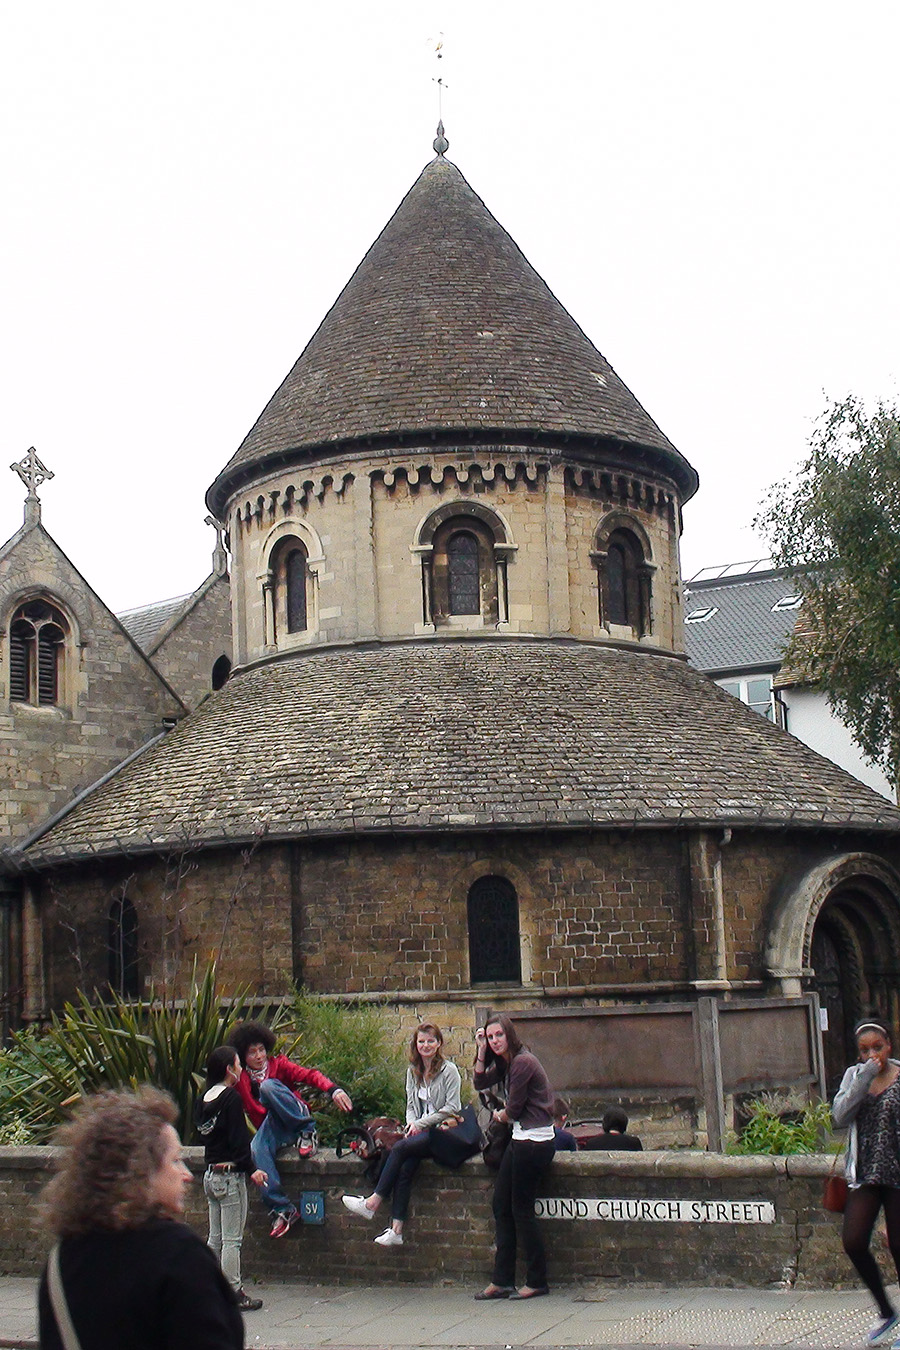 Англия Кембридж круглая церковь